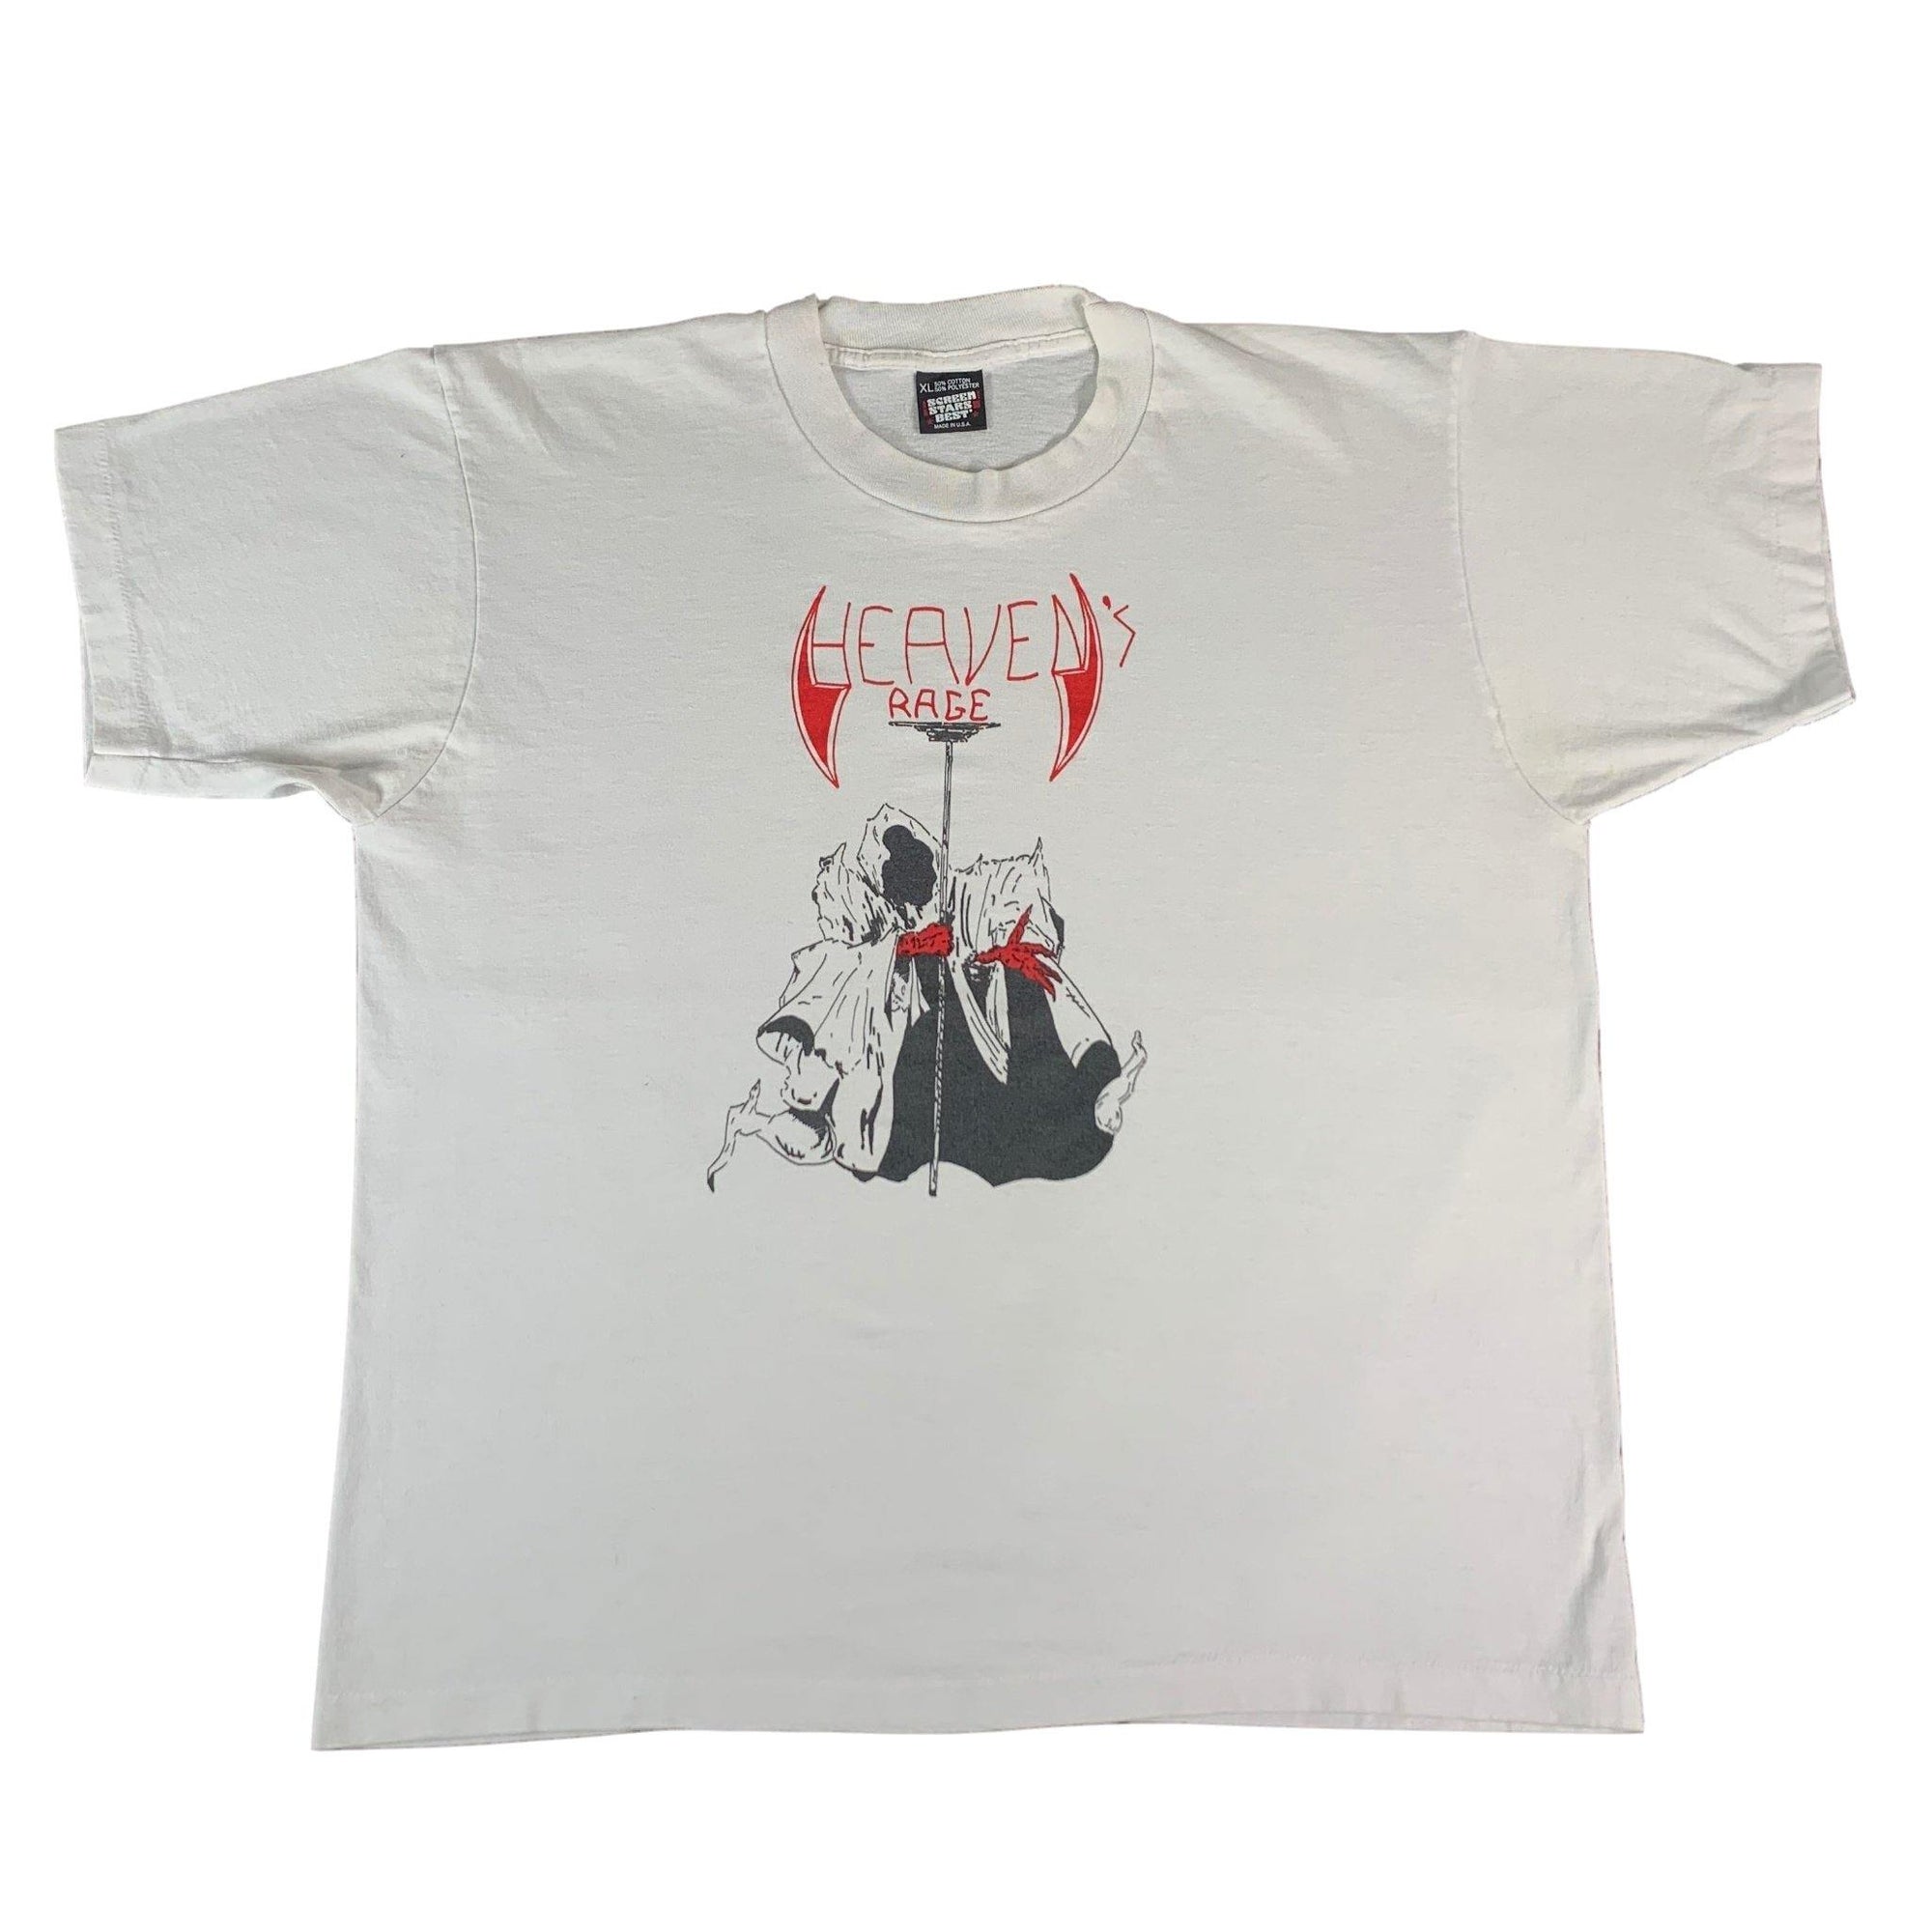 Vintage Heaven's Rage "Reaper" T-Shirt - jointcustodydc